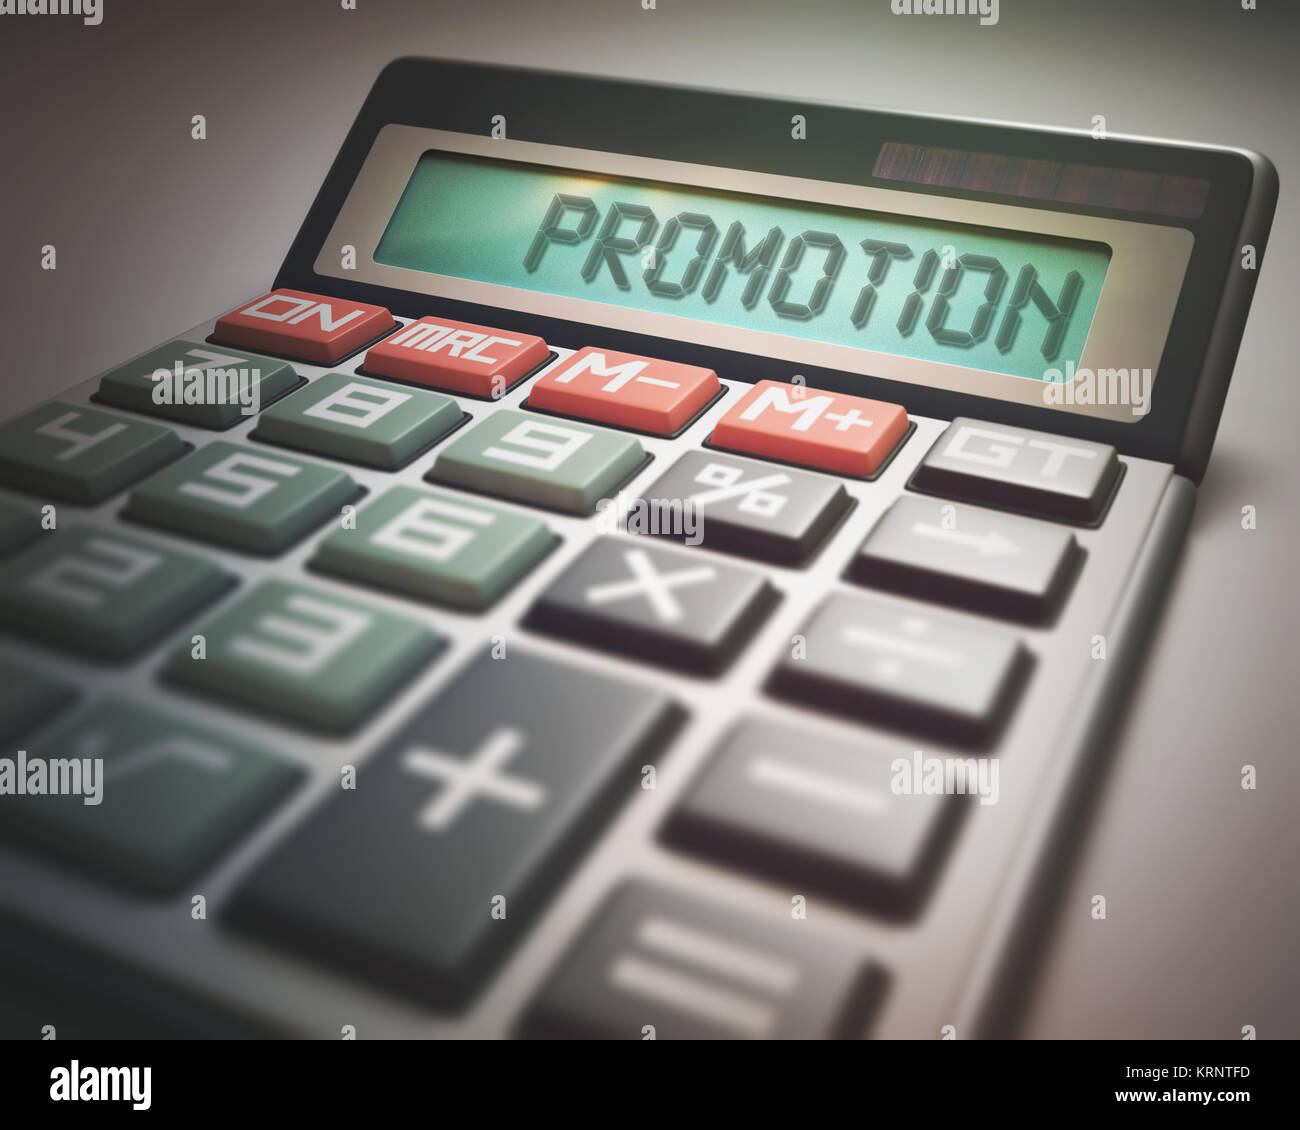 Promotion Calculator Stock Photo